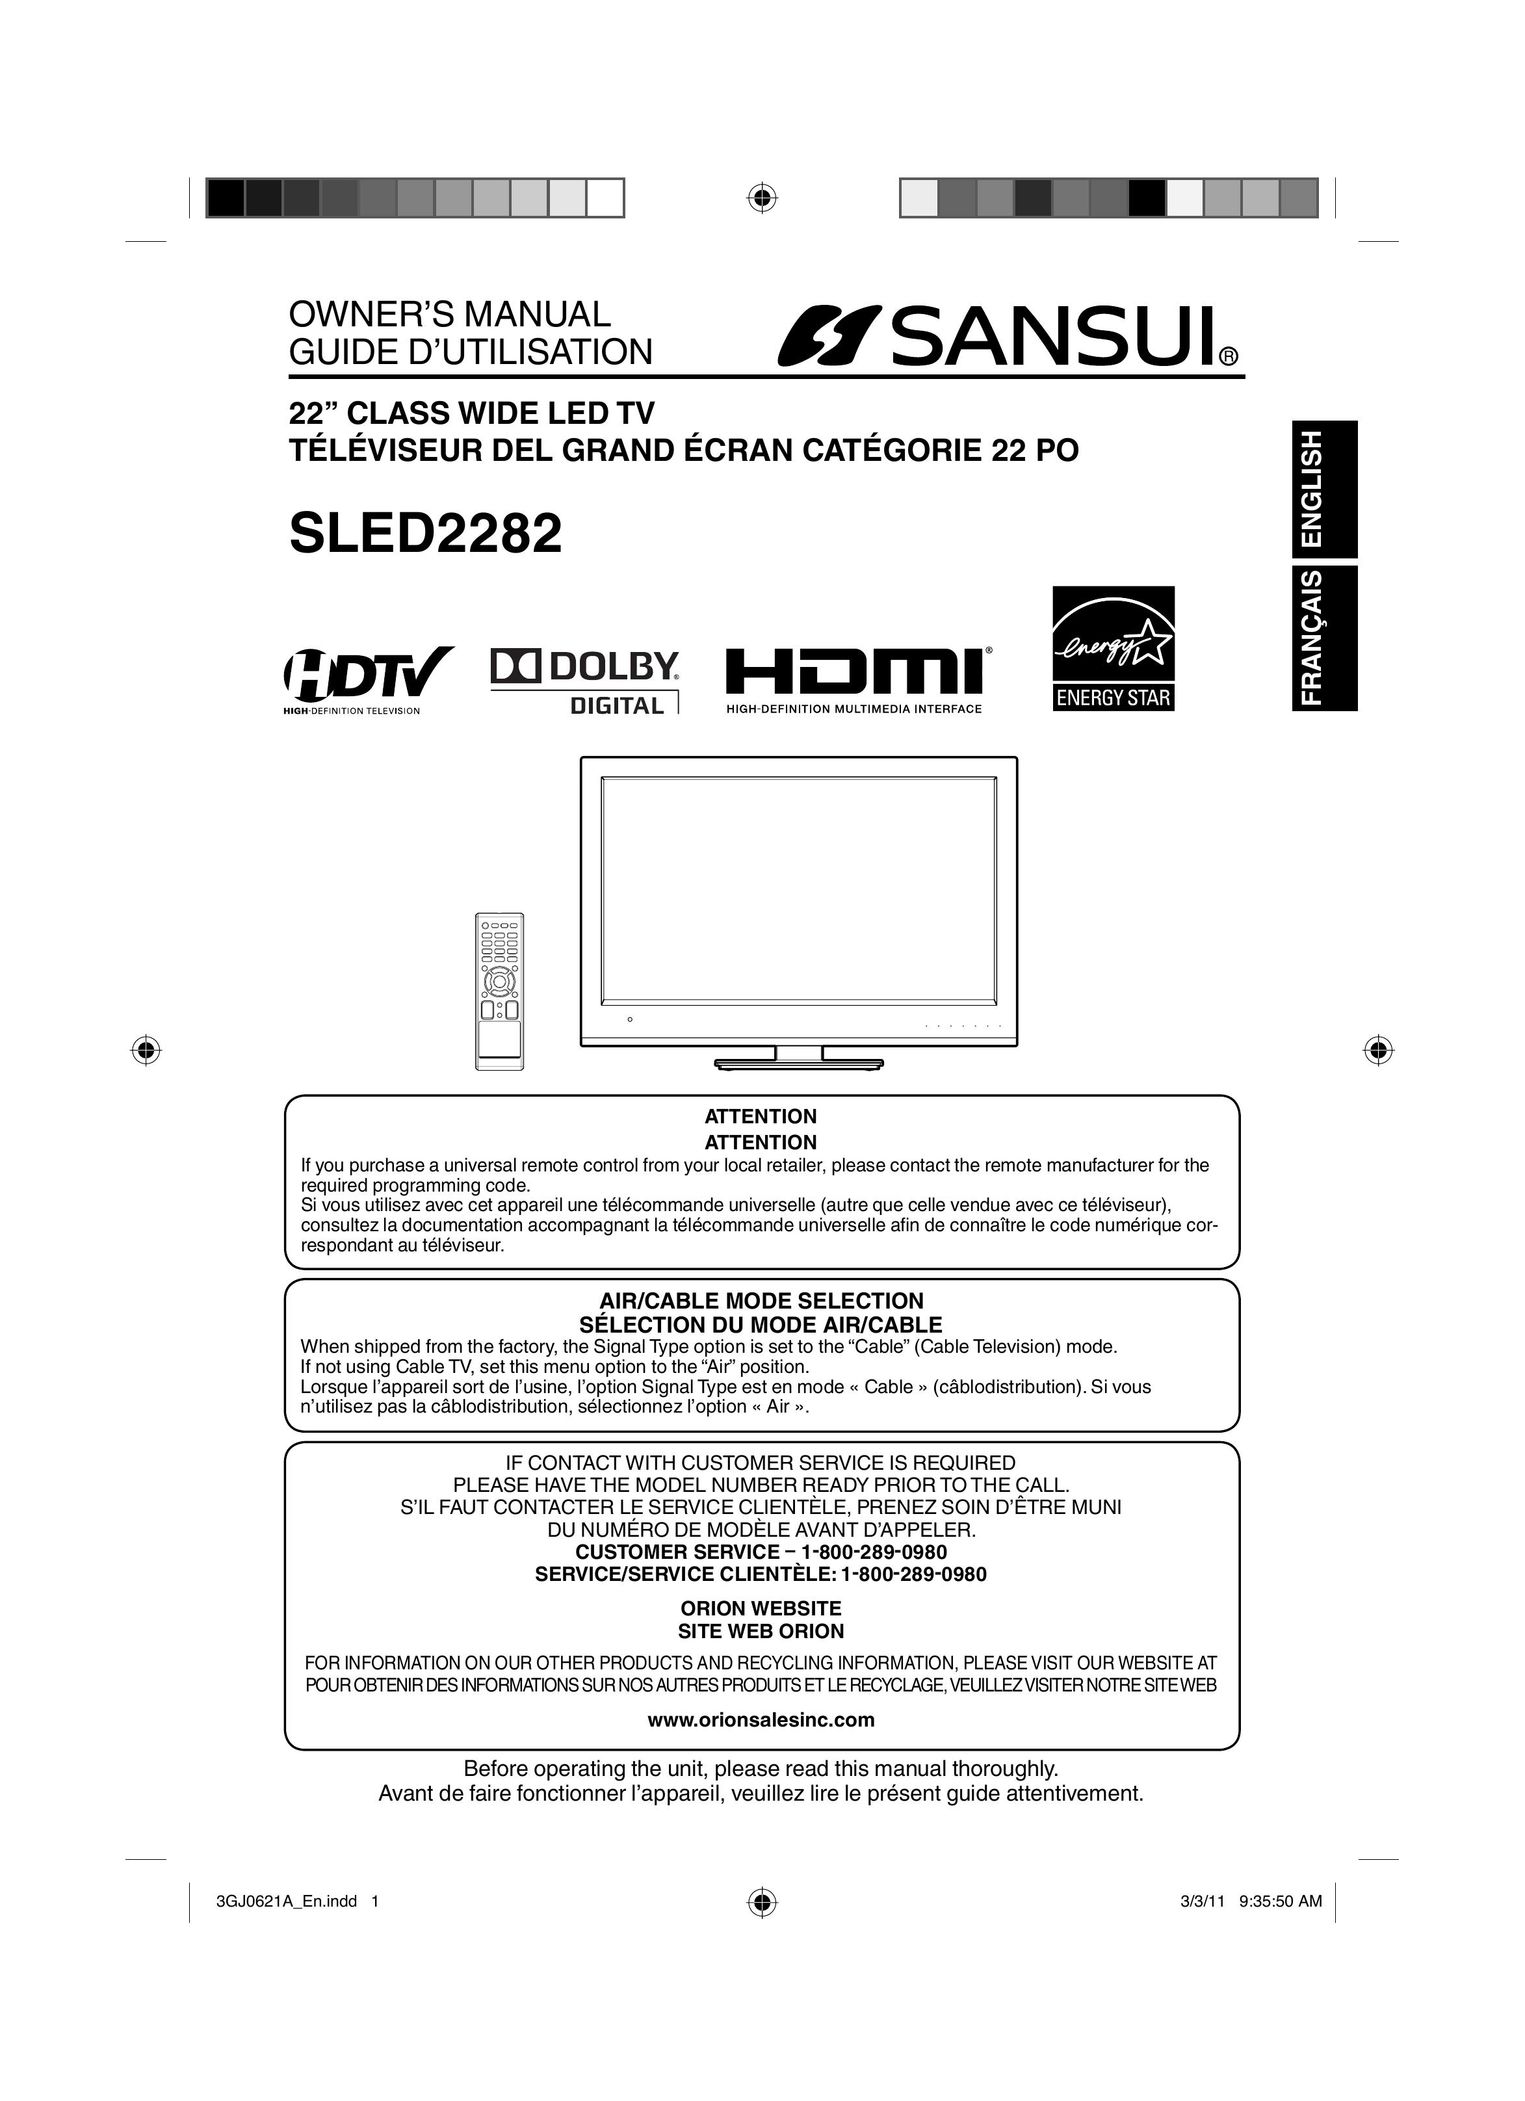 Sansui SLED2282 Flat Panel Television User Manual